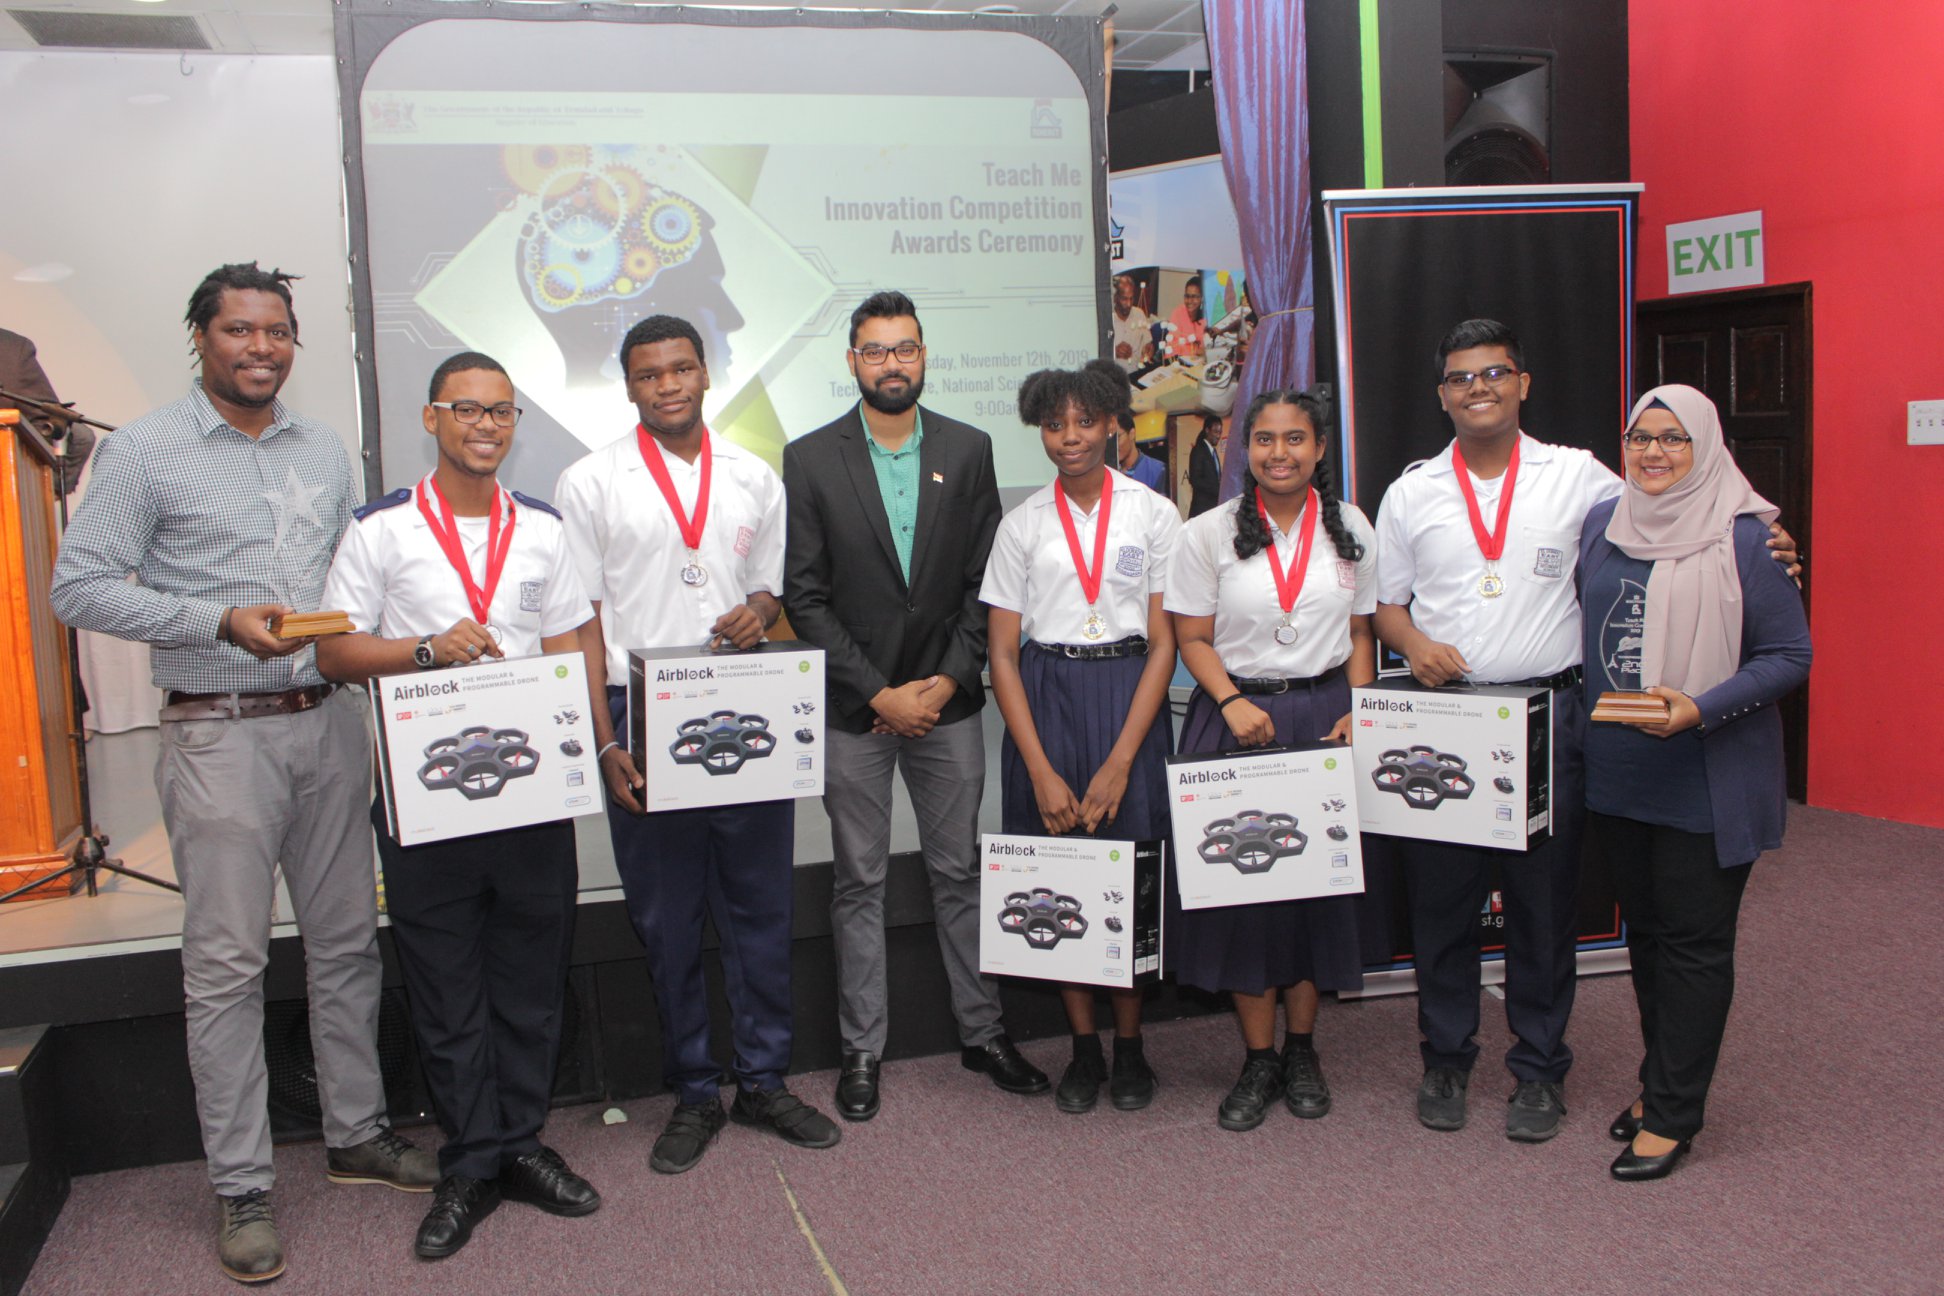 1st Place winners - El Dorado East Secondary